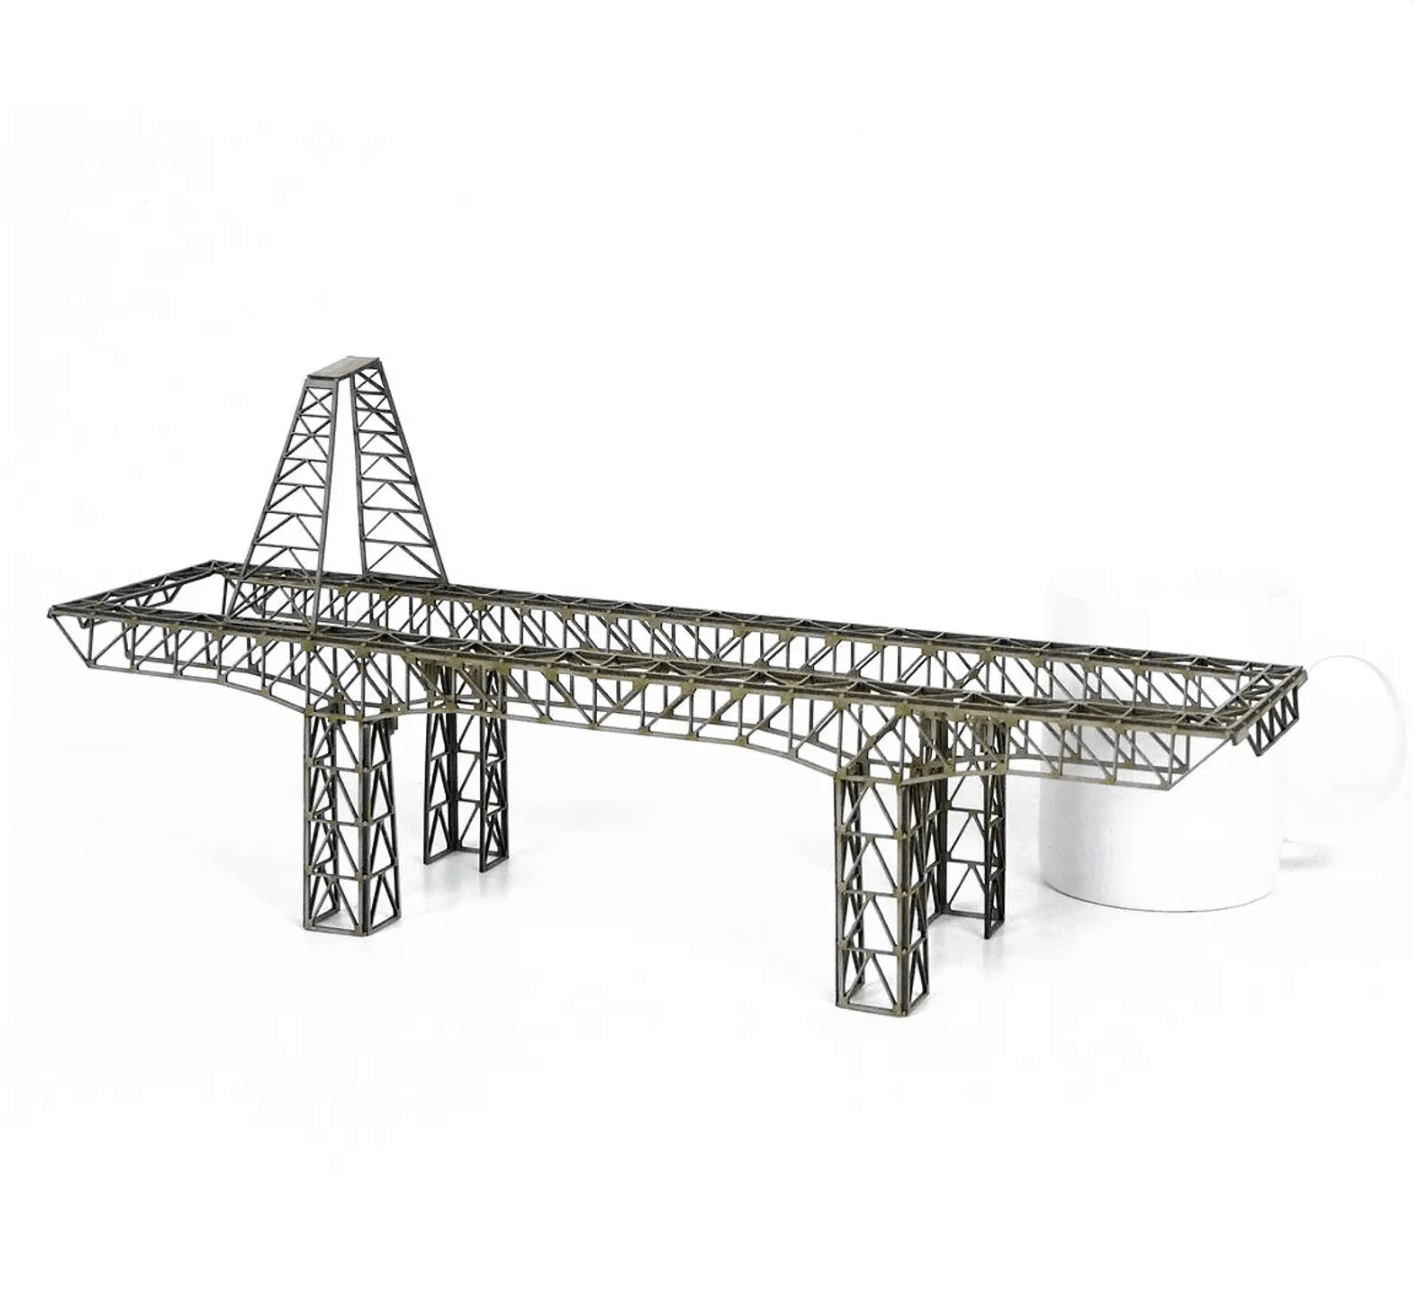 model of a crane gantry for the 2021 gift guide